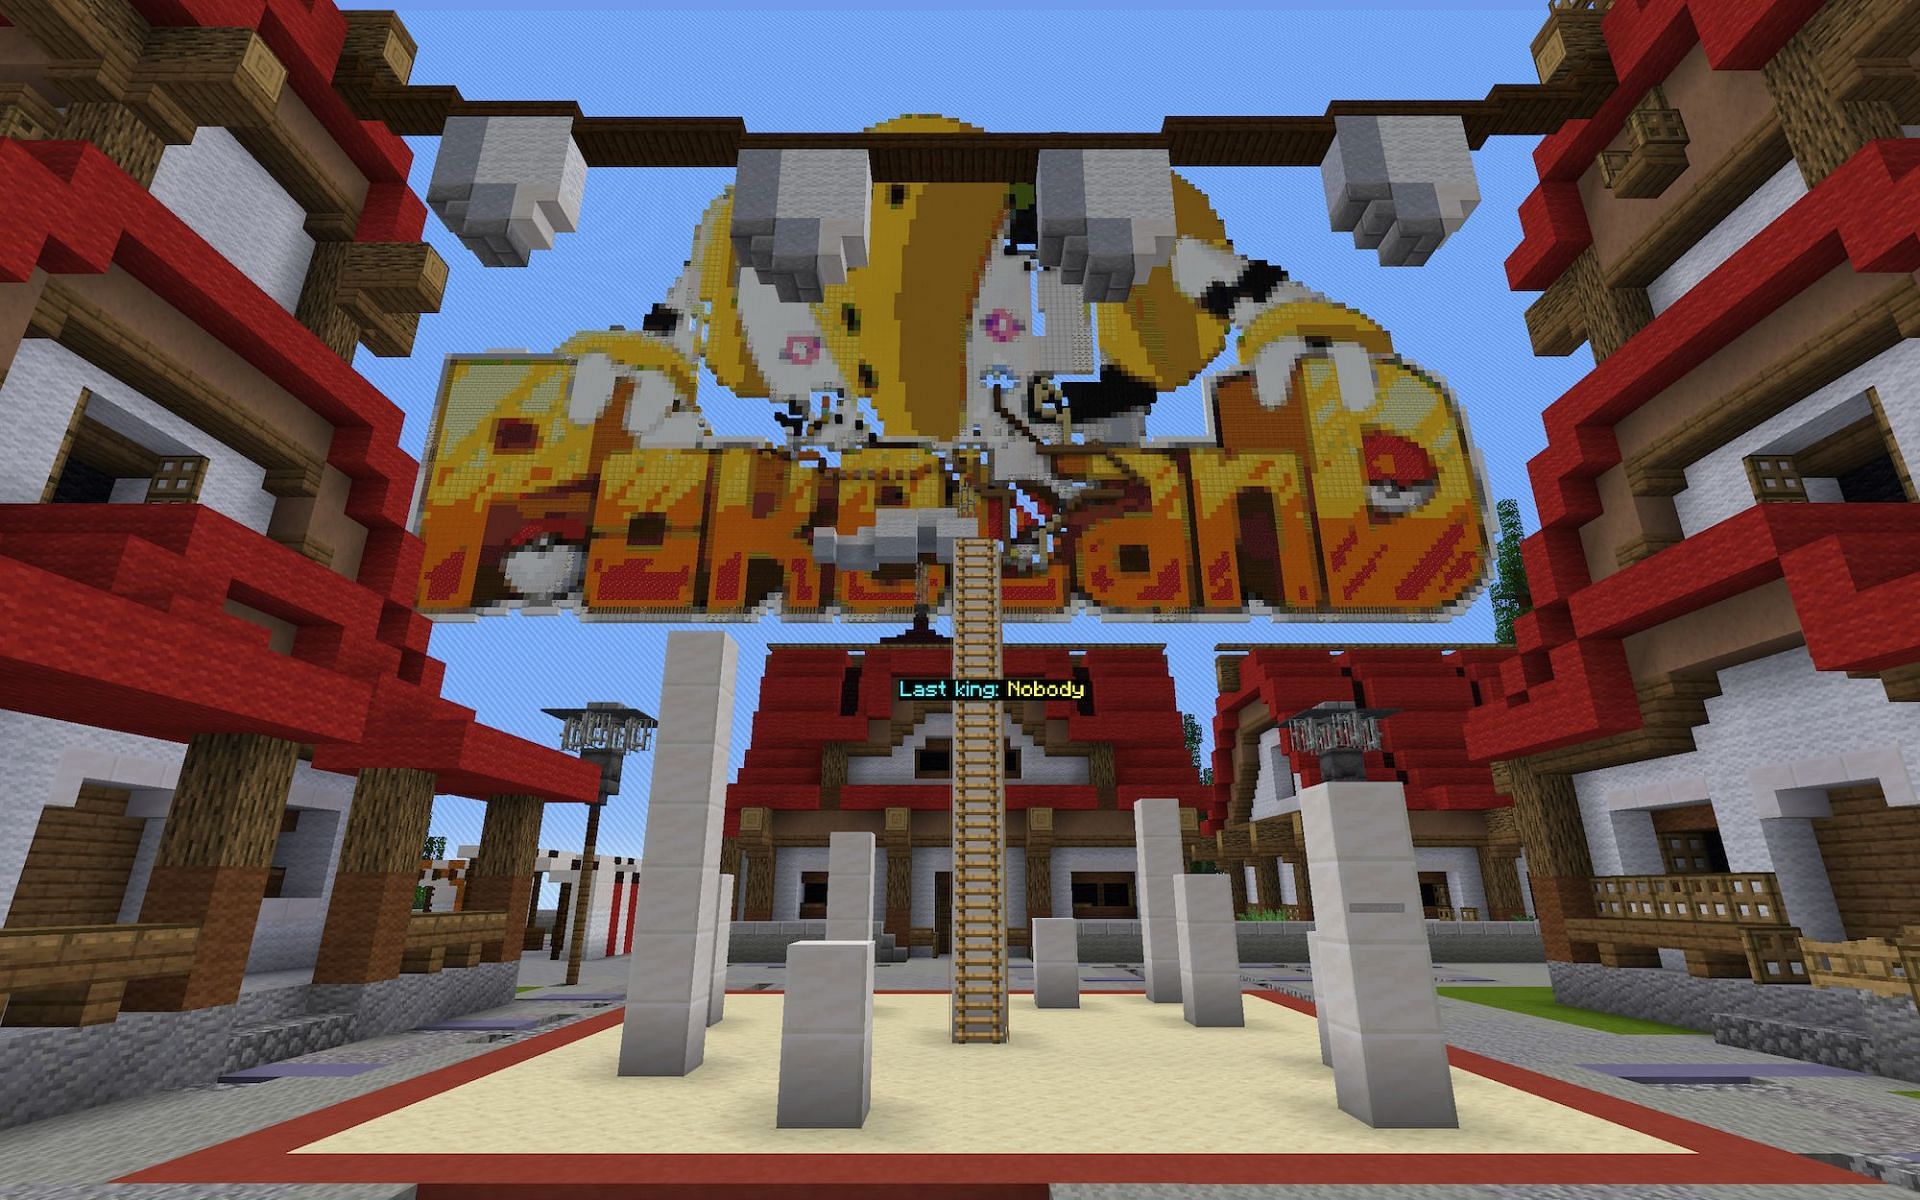 Pokeland lobby [Image via Minecraft]